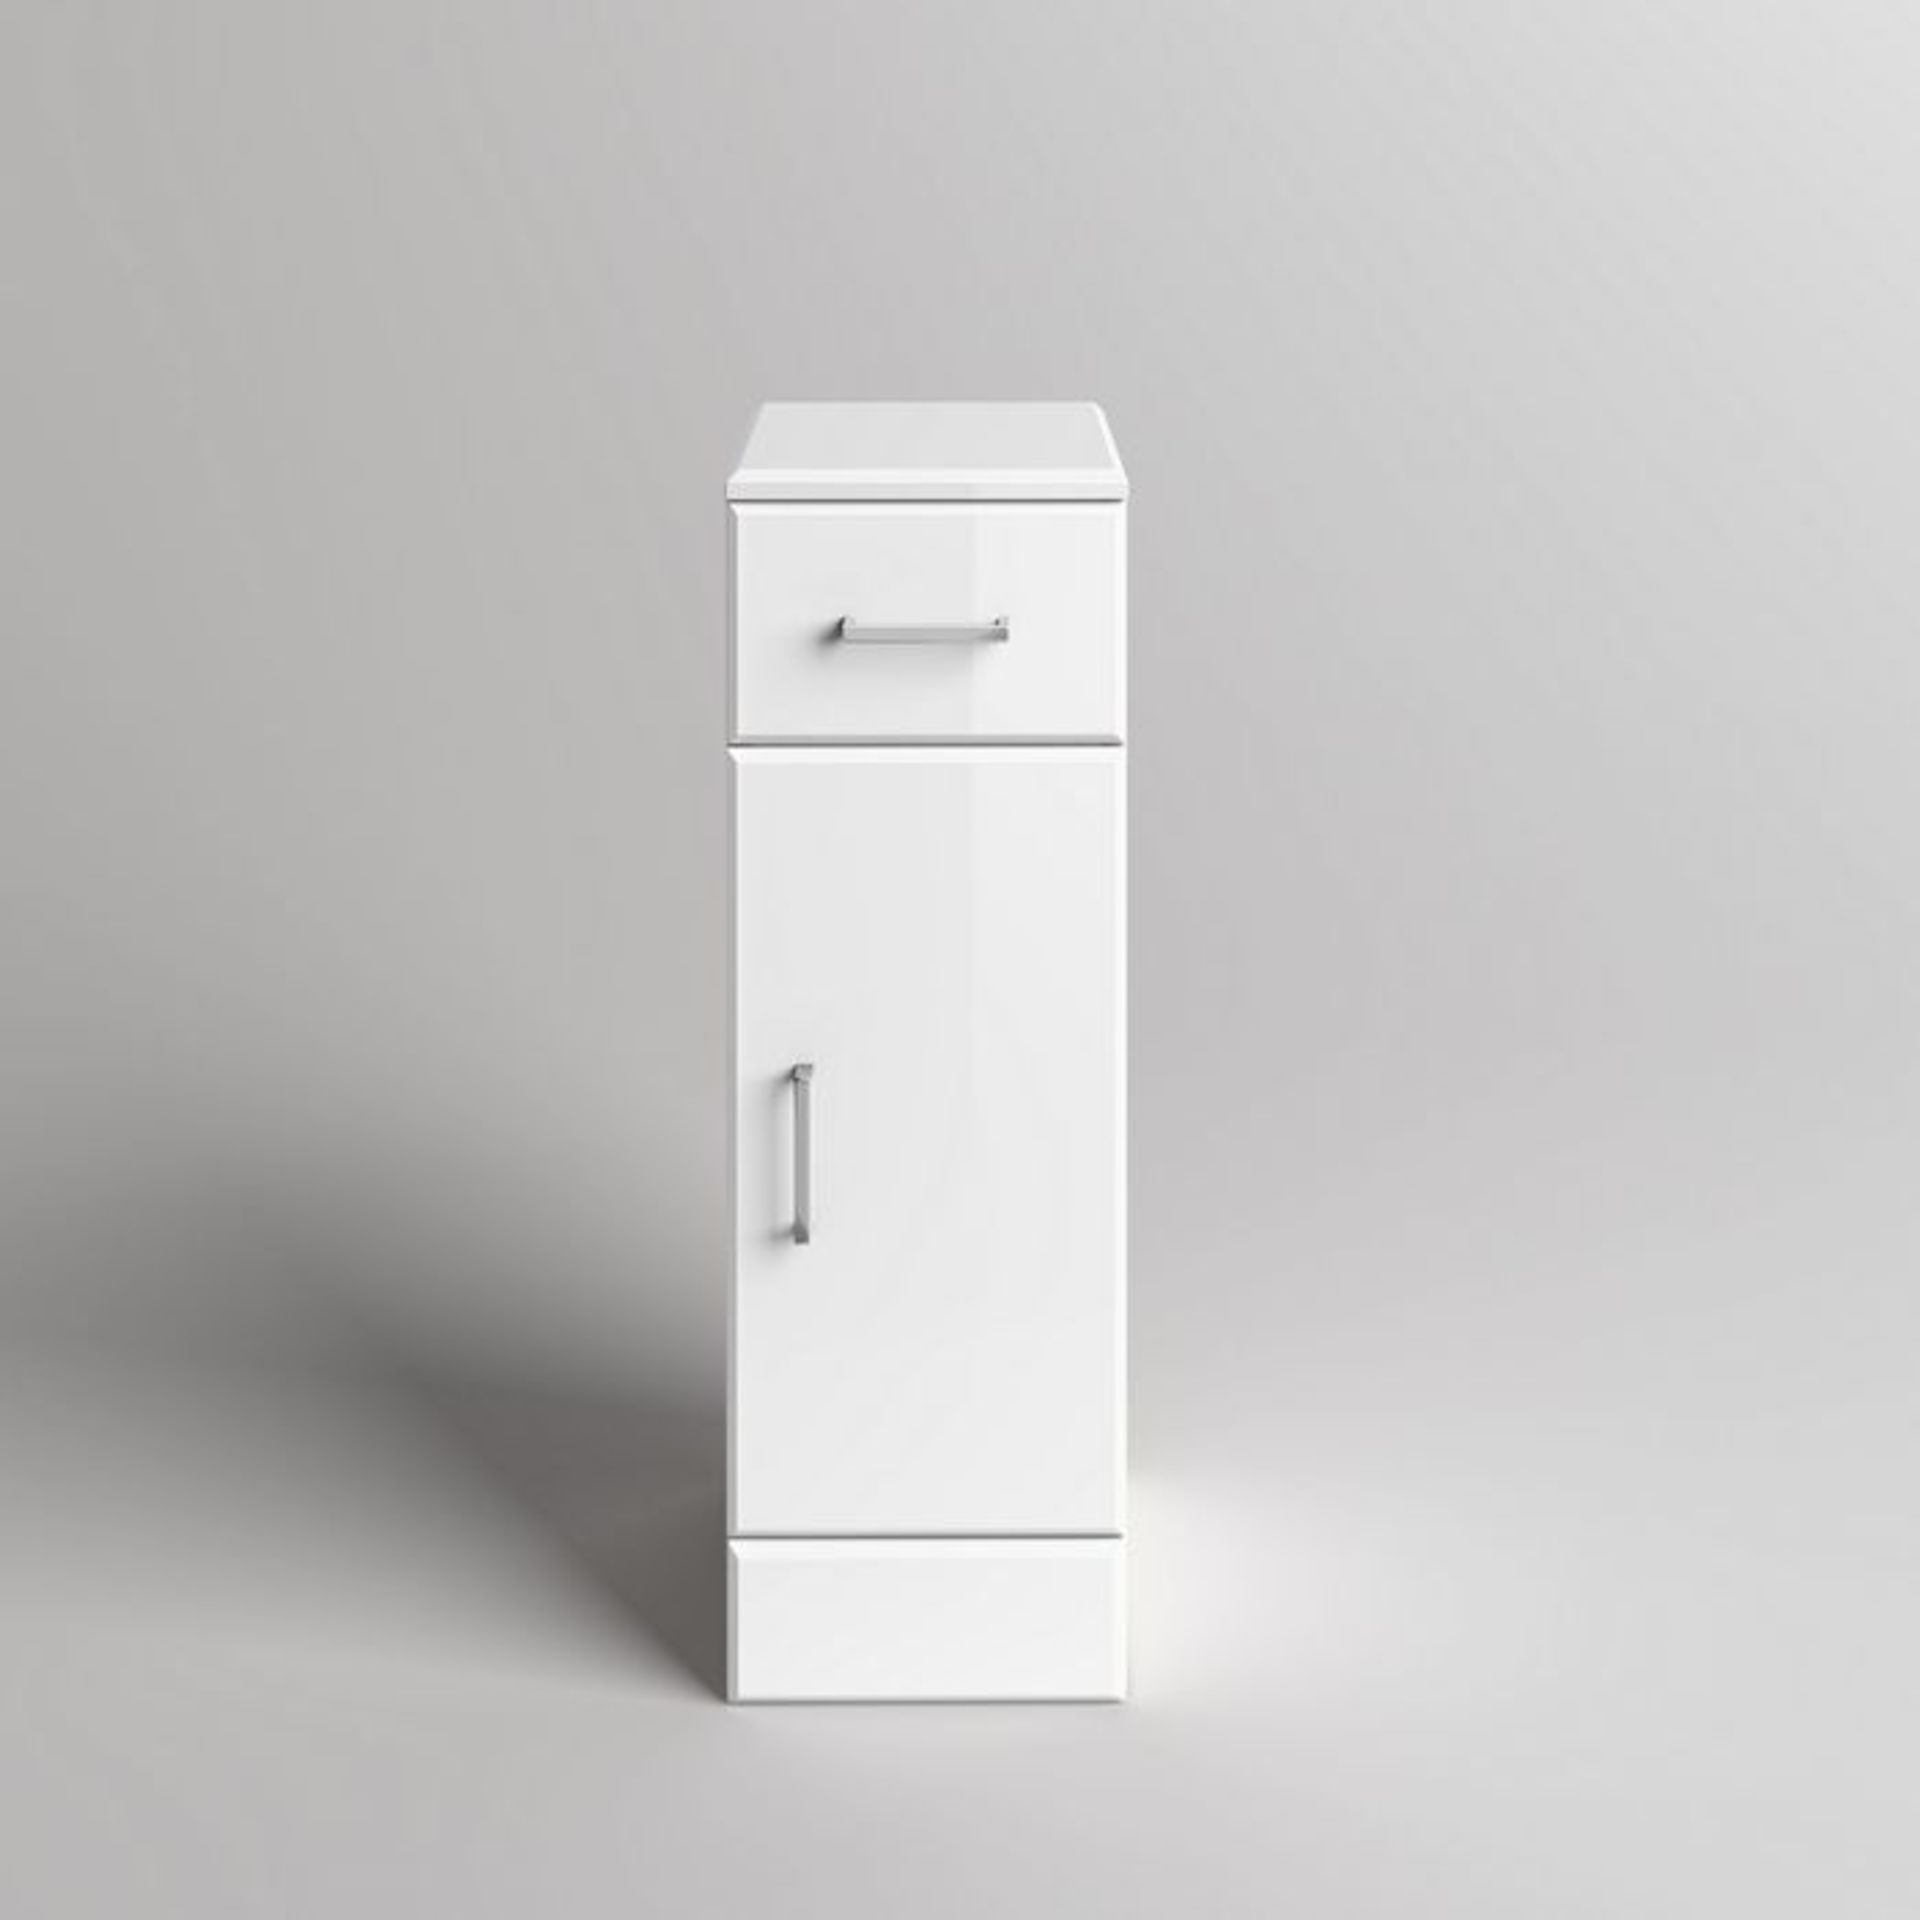 (DK18) 250x300mm Quartz Gloss White Small Side Cabinet Unit. Pristine gloss white finish Great - Image 4 of 5